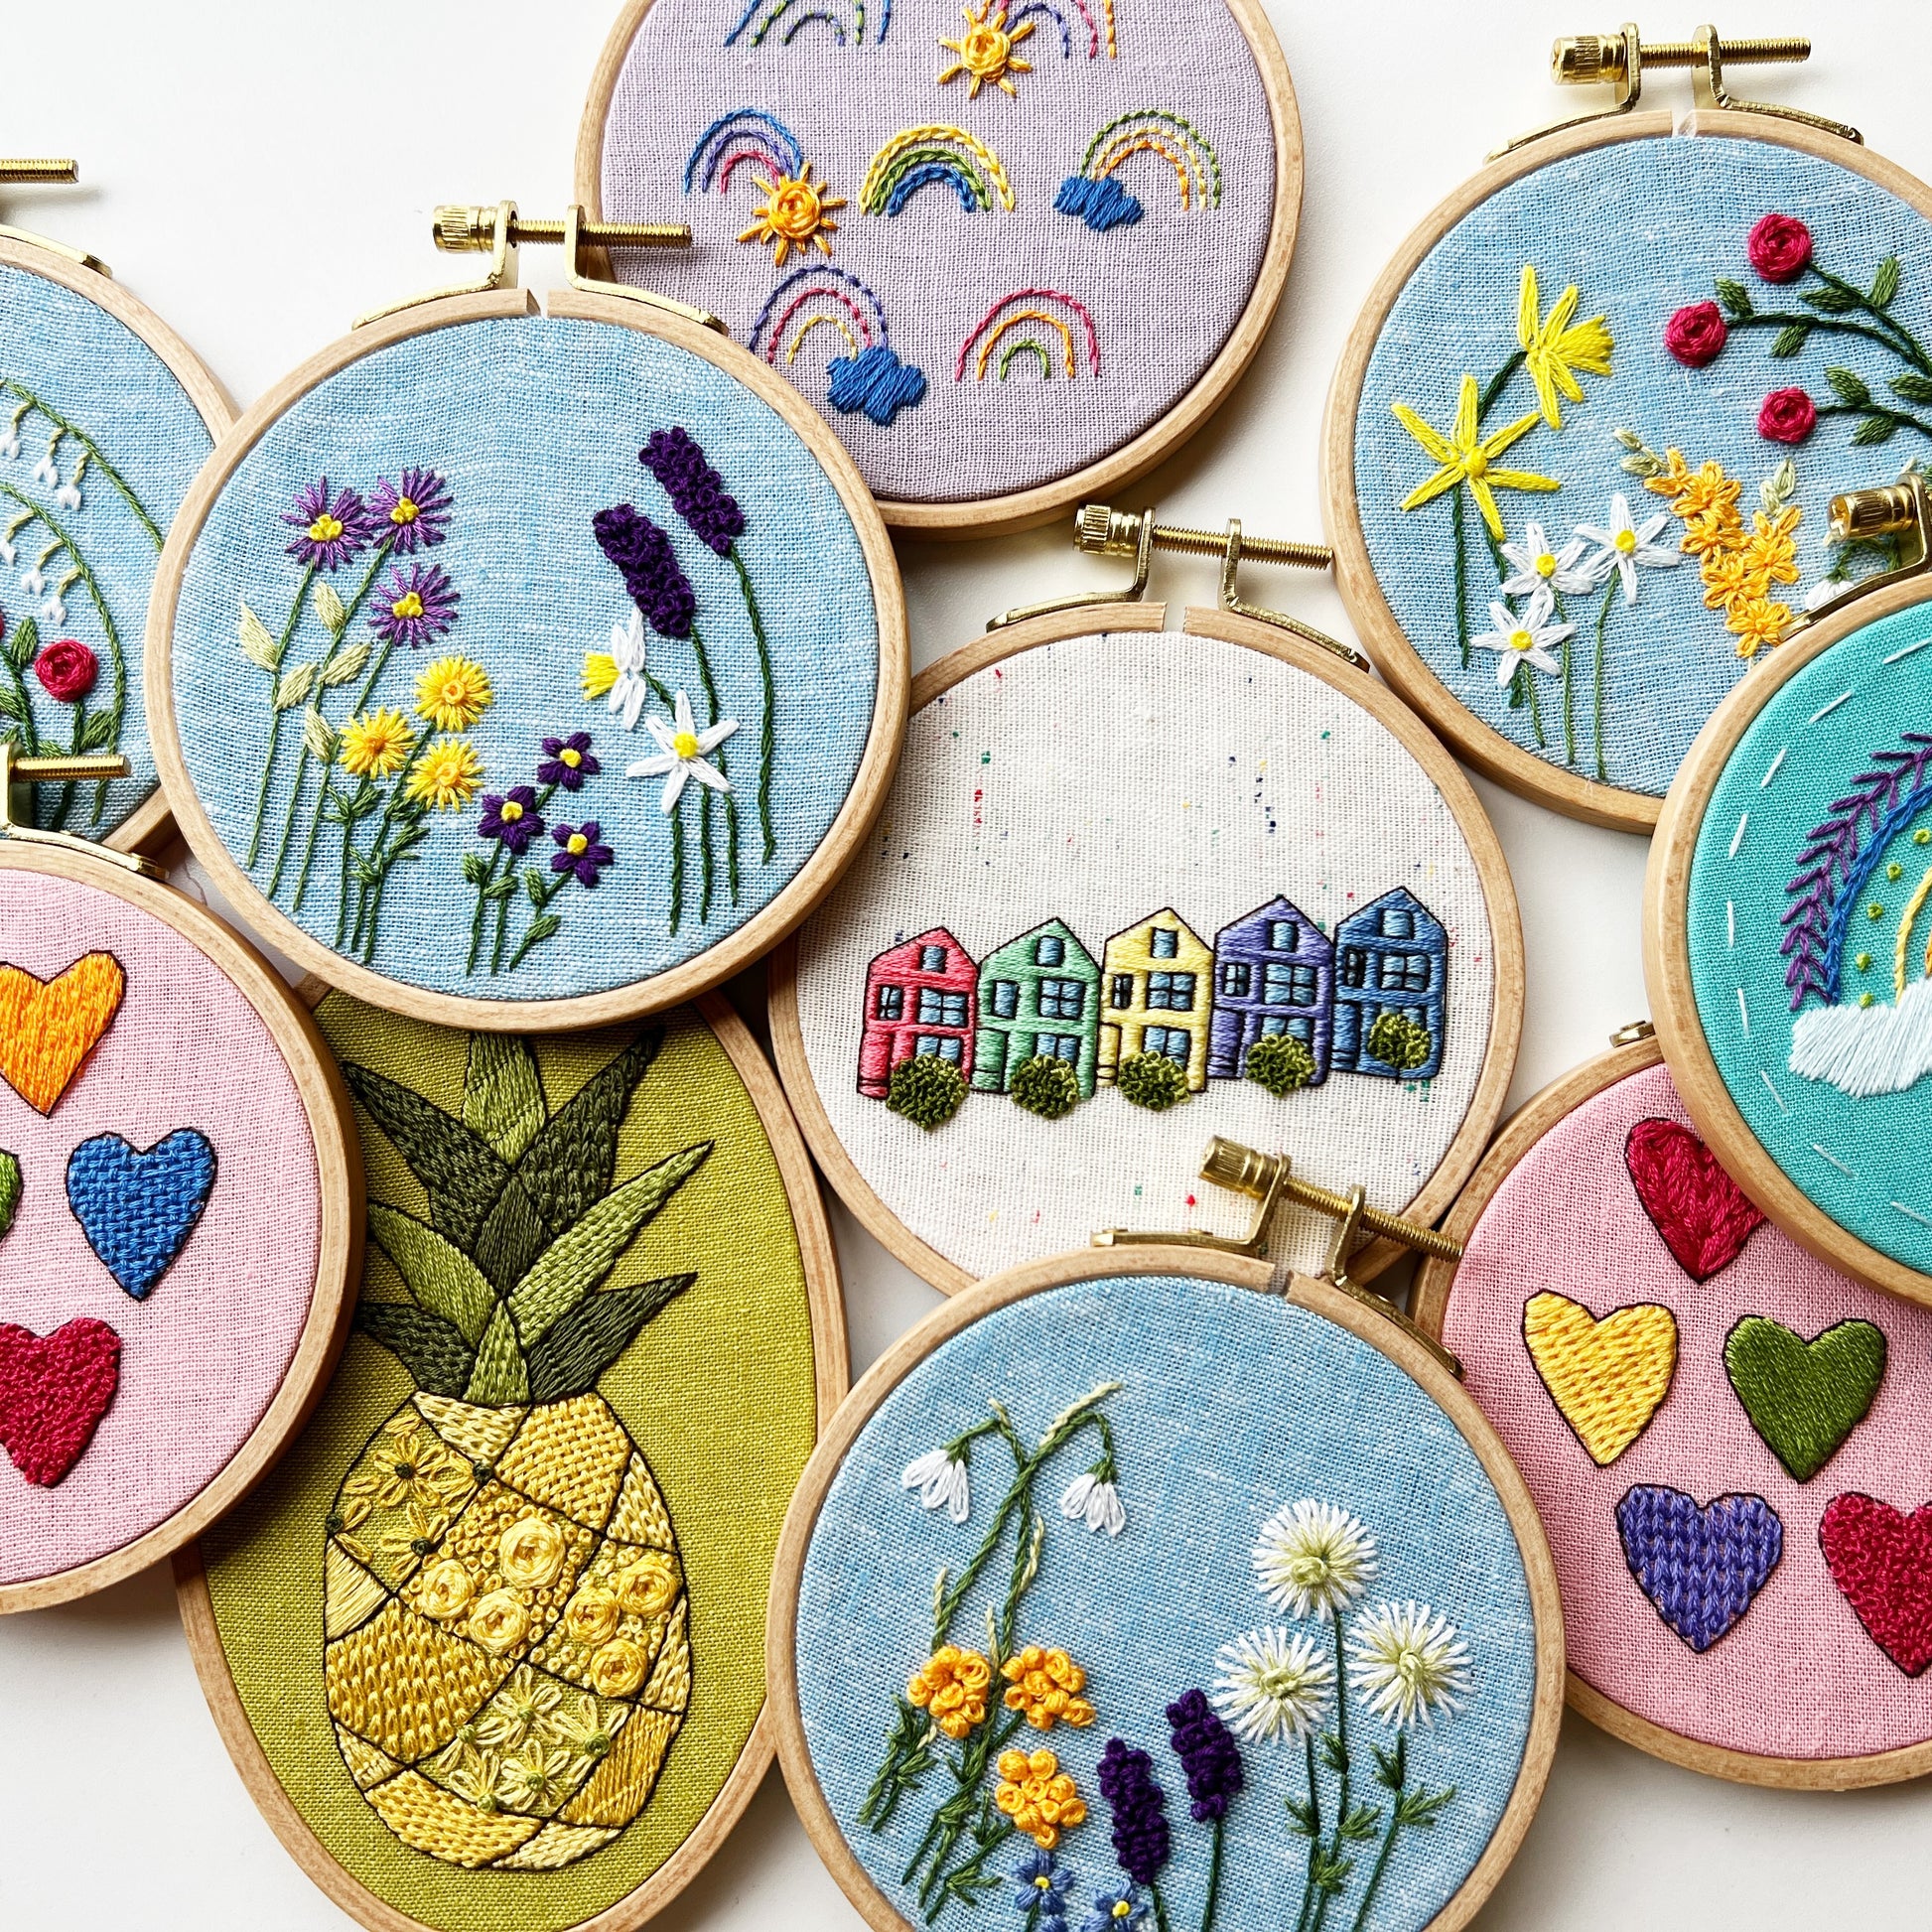 Funny Embroidery Kit: I Speak Fluent Sarcasm — I Heart Stitch Art: Beginner Embroidery  Kits + Patterns